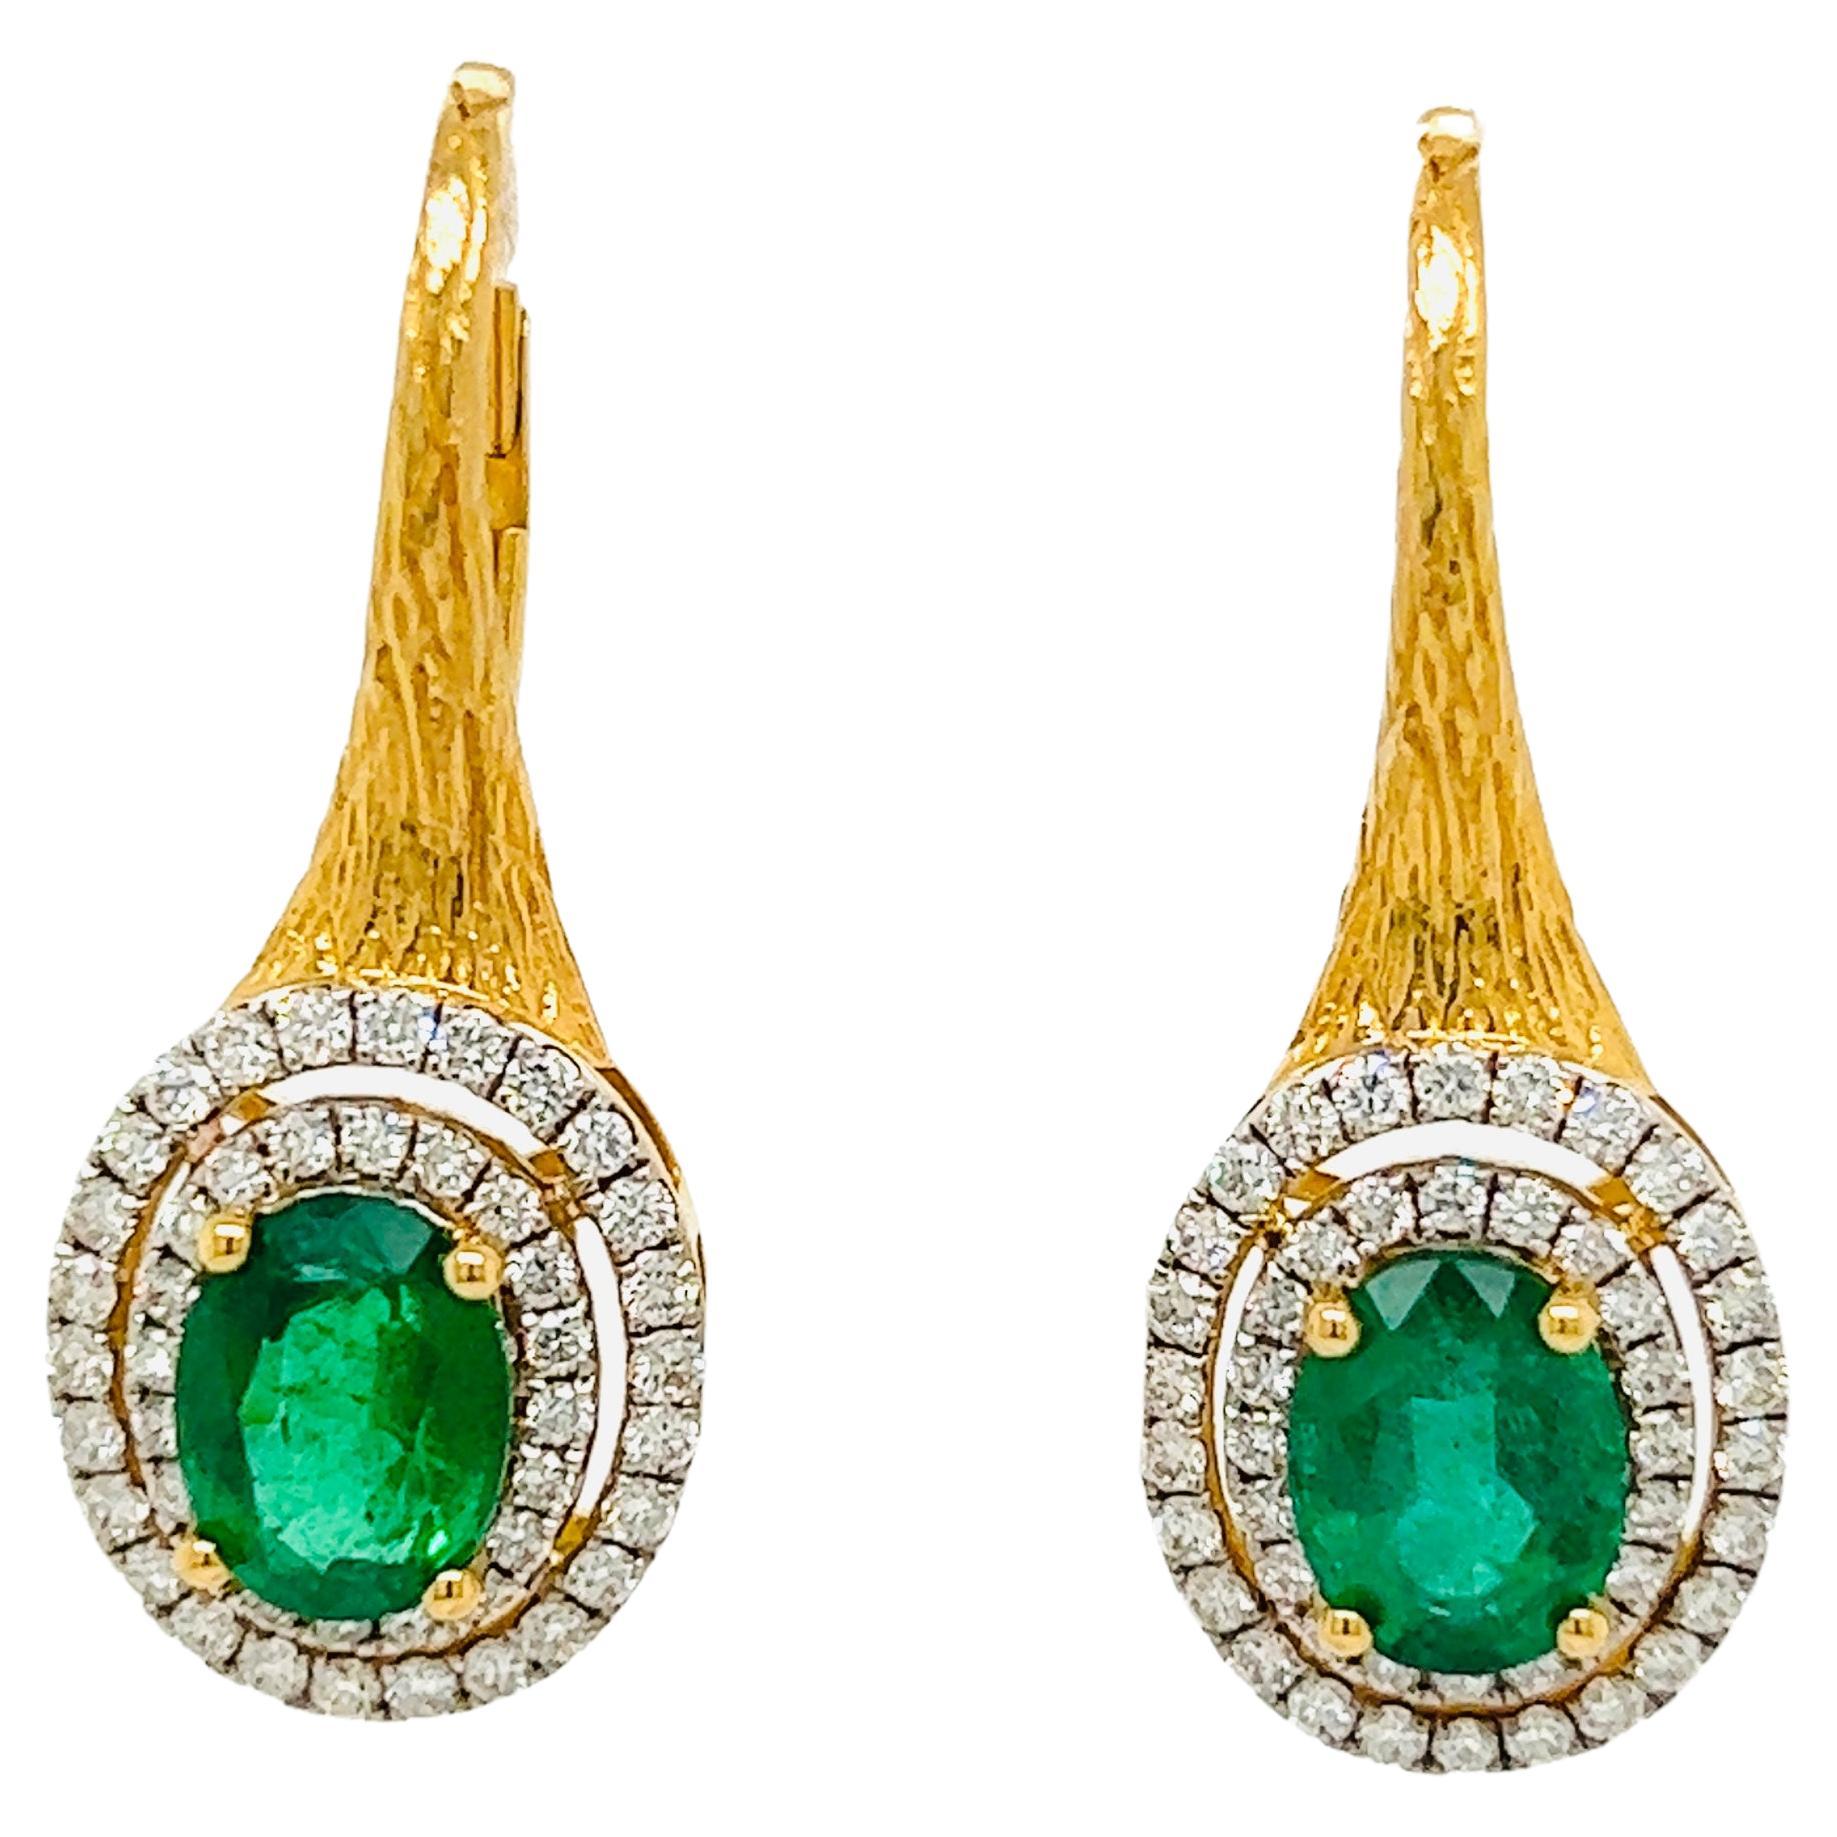 2.5 Carat Emerald and Diamond Earrings 